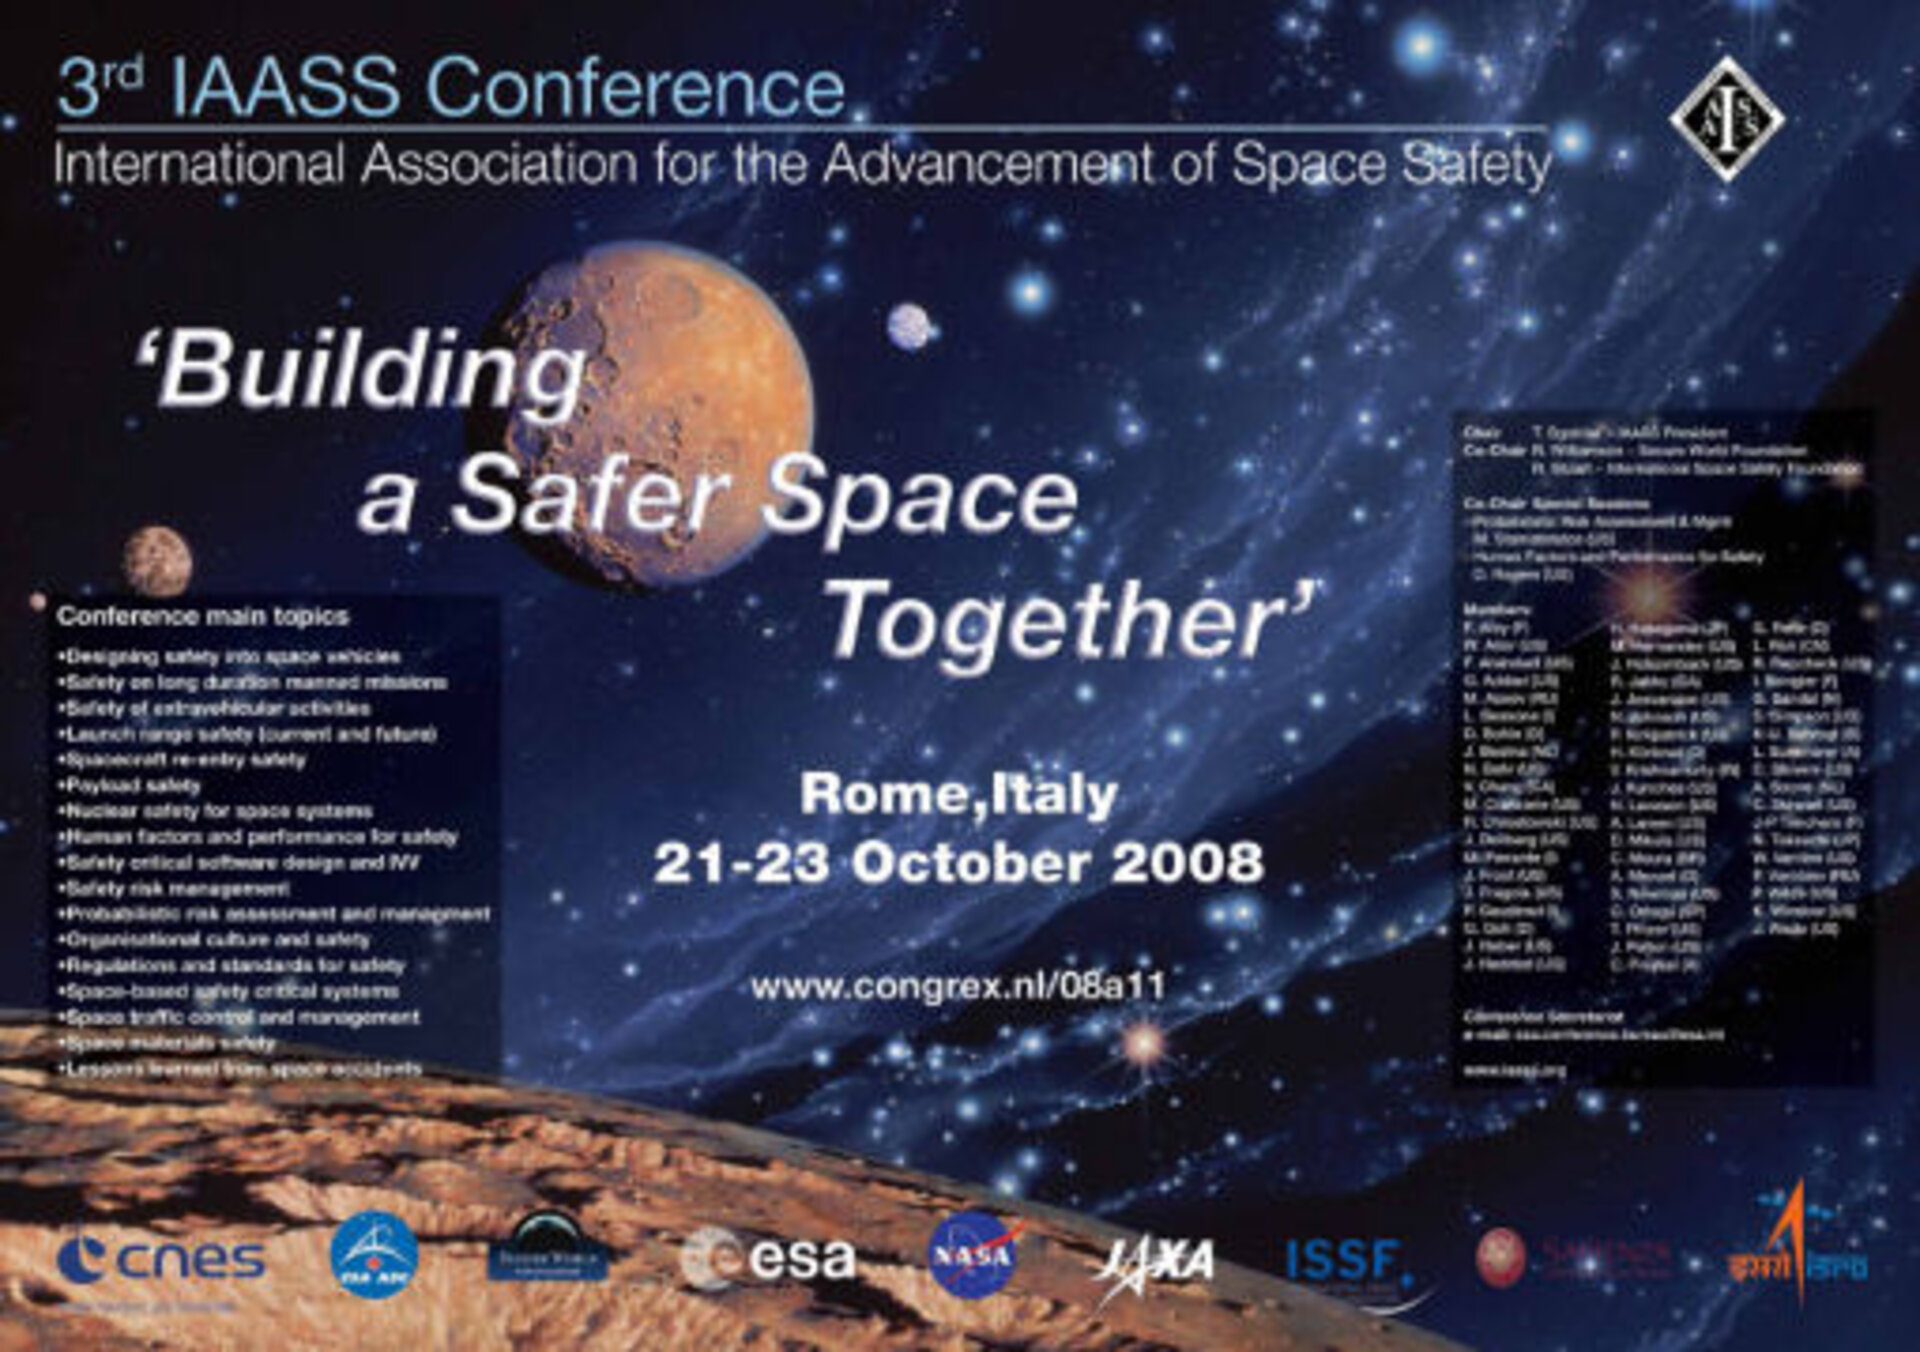 Il poster della Conferenza IAASS "Building a Safer Space Together"